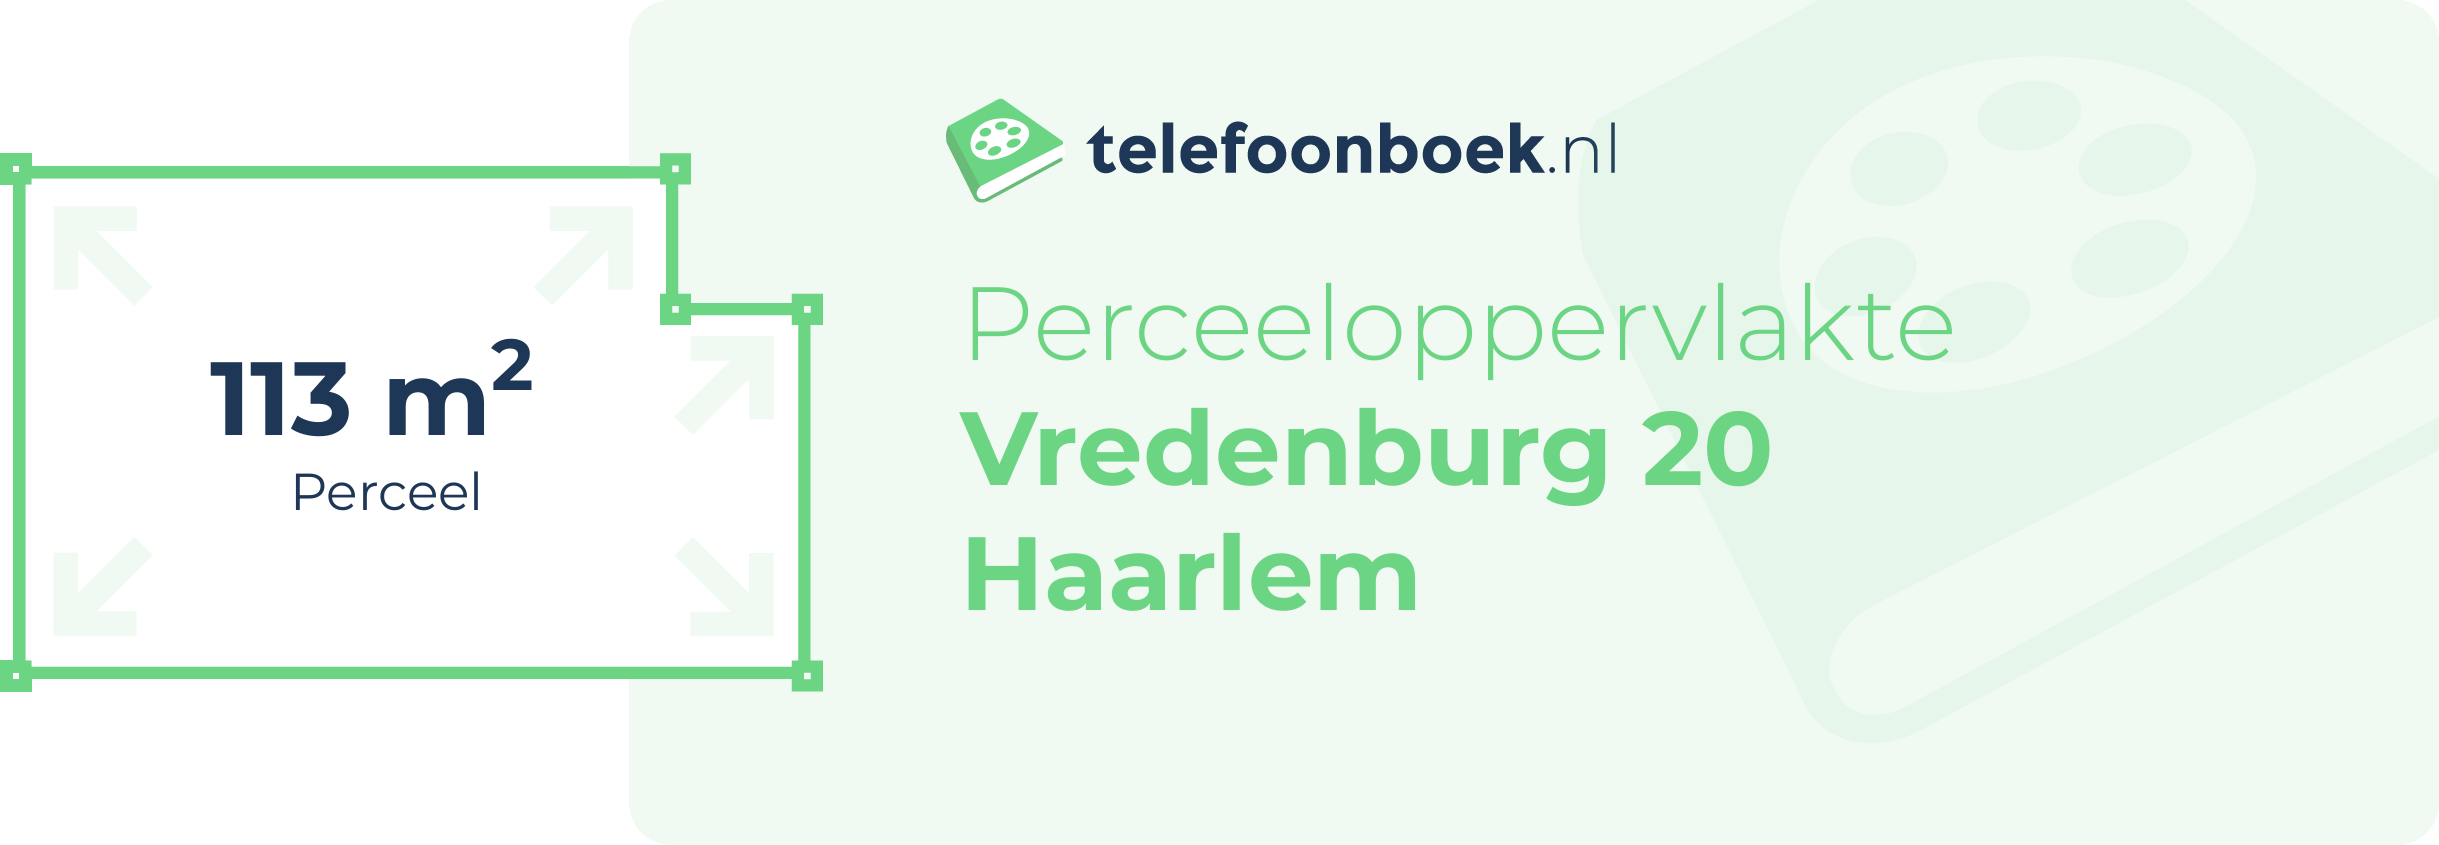 Perceeloppervlakte Vredenburg 20 Haarlem